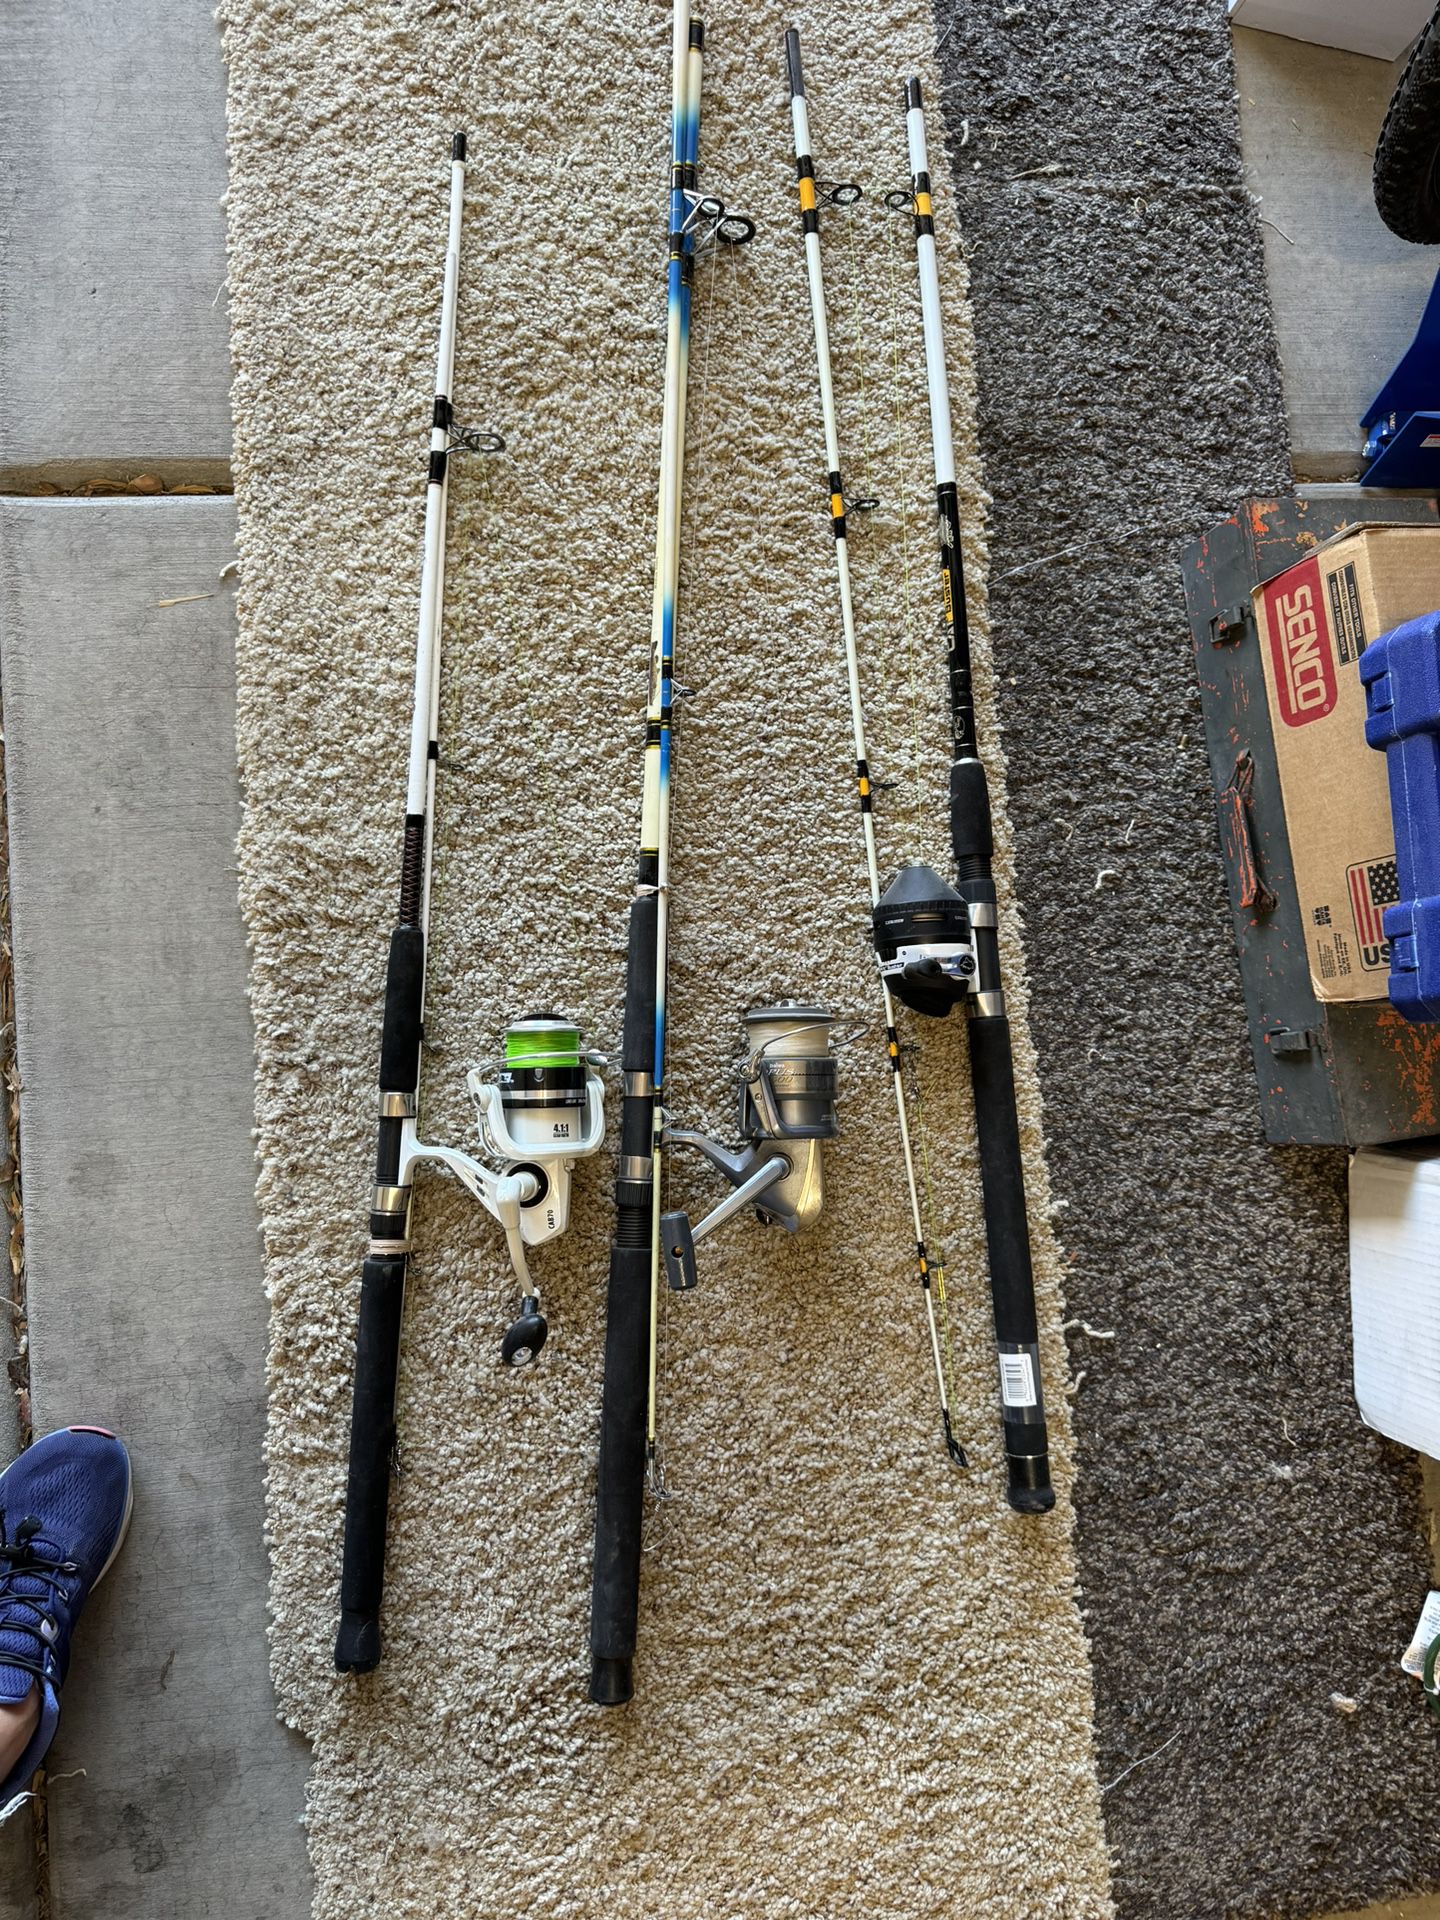 6 fishing rods & 6 reels